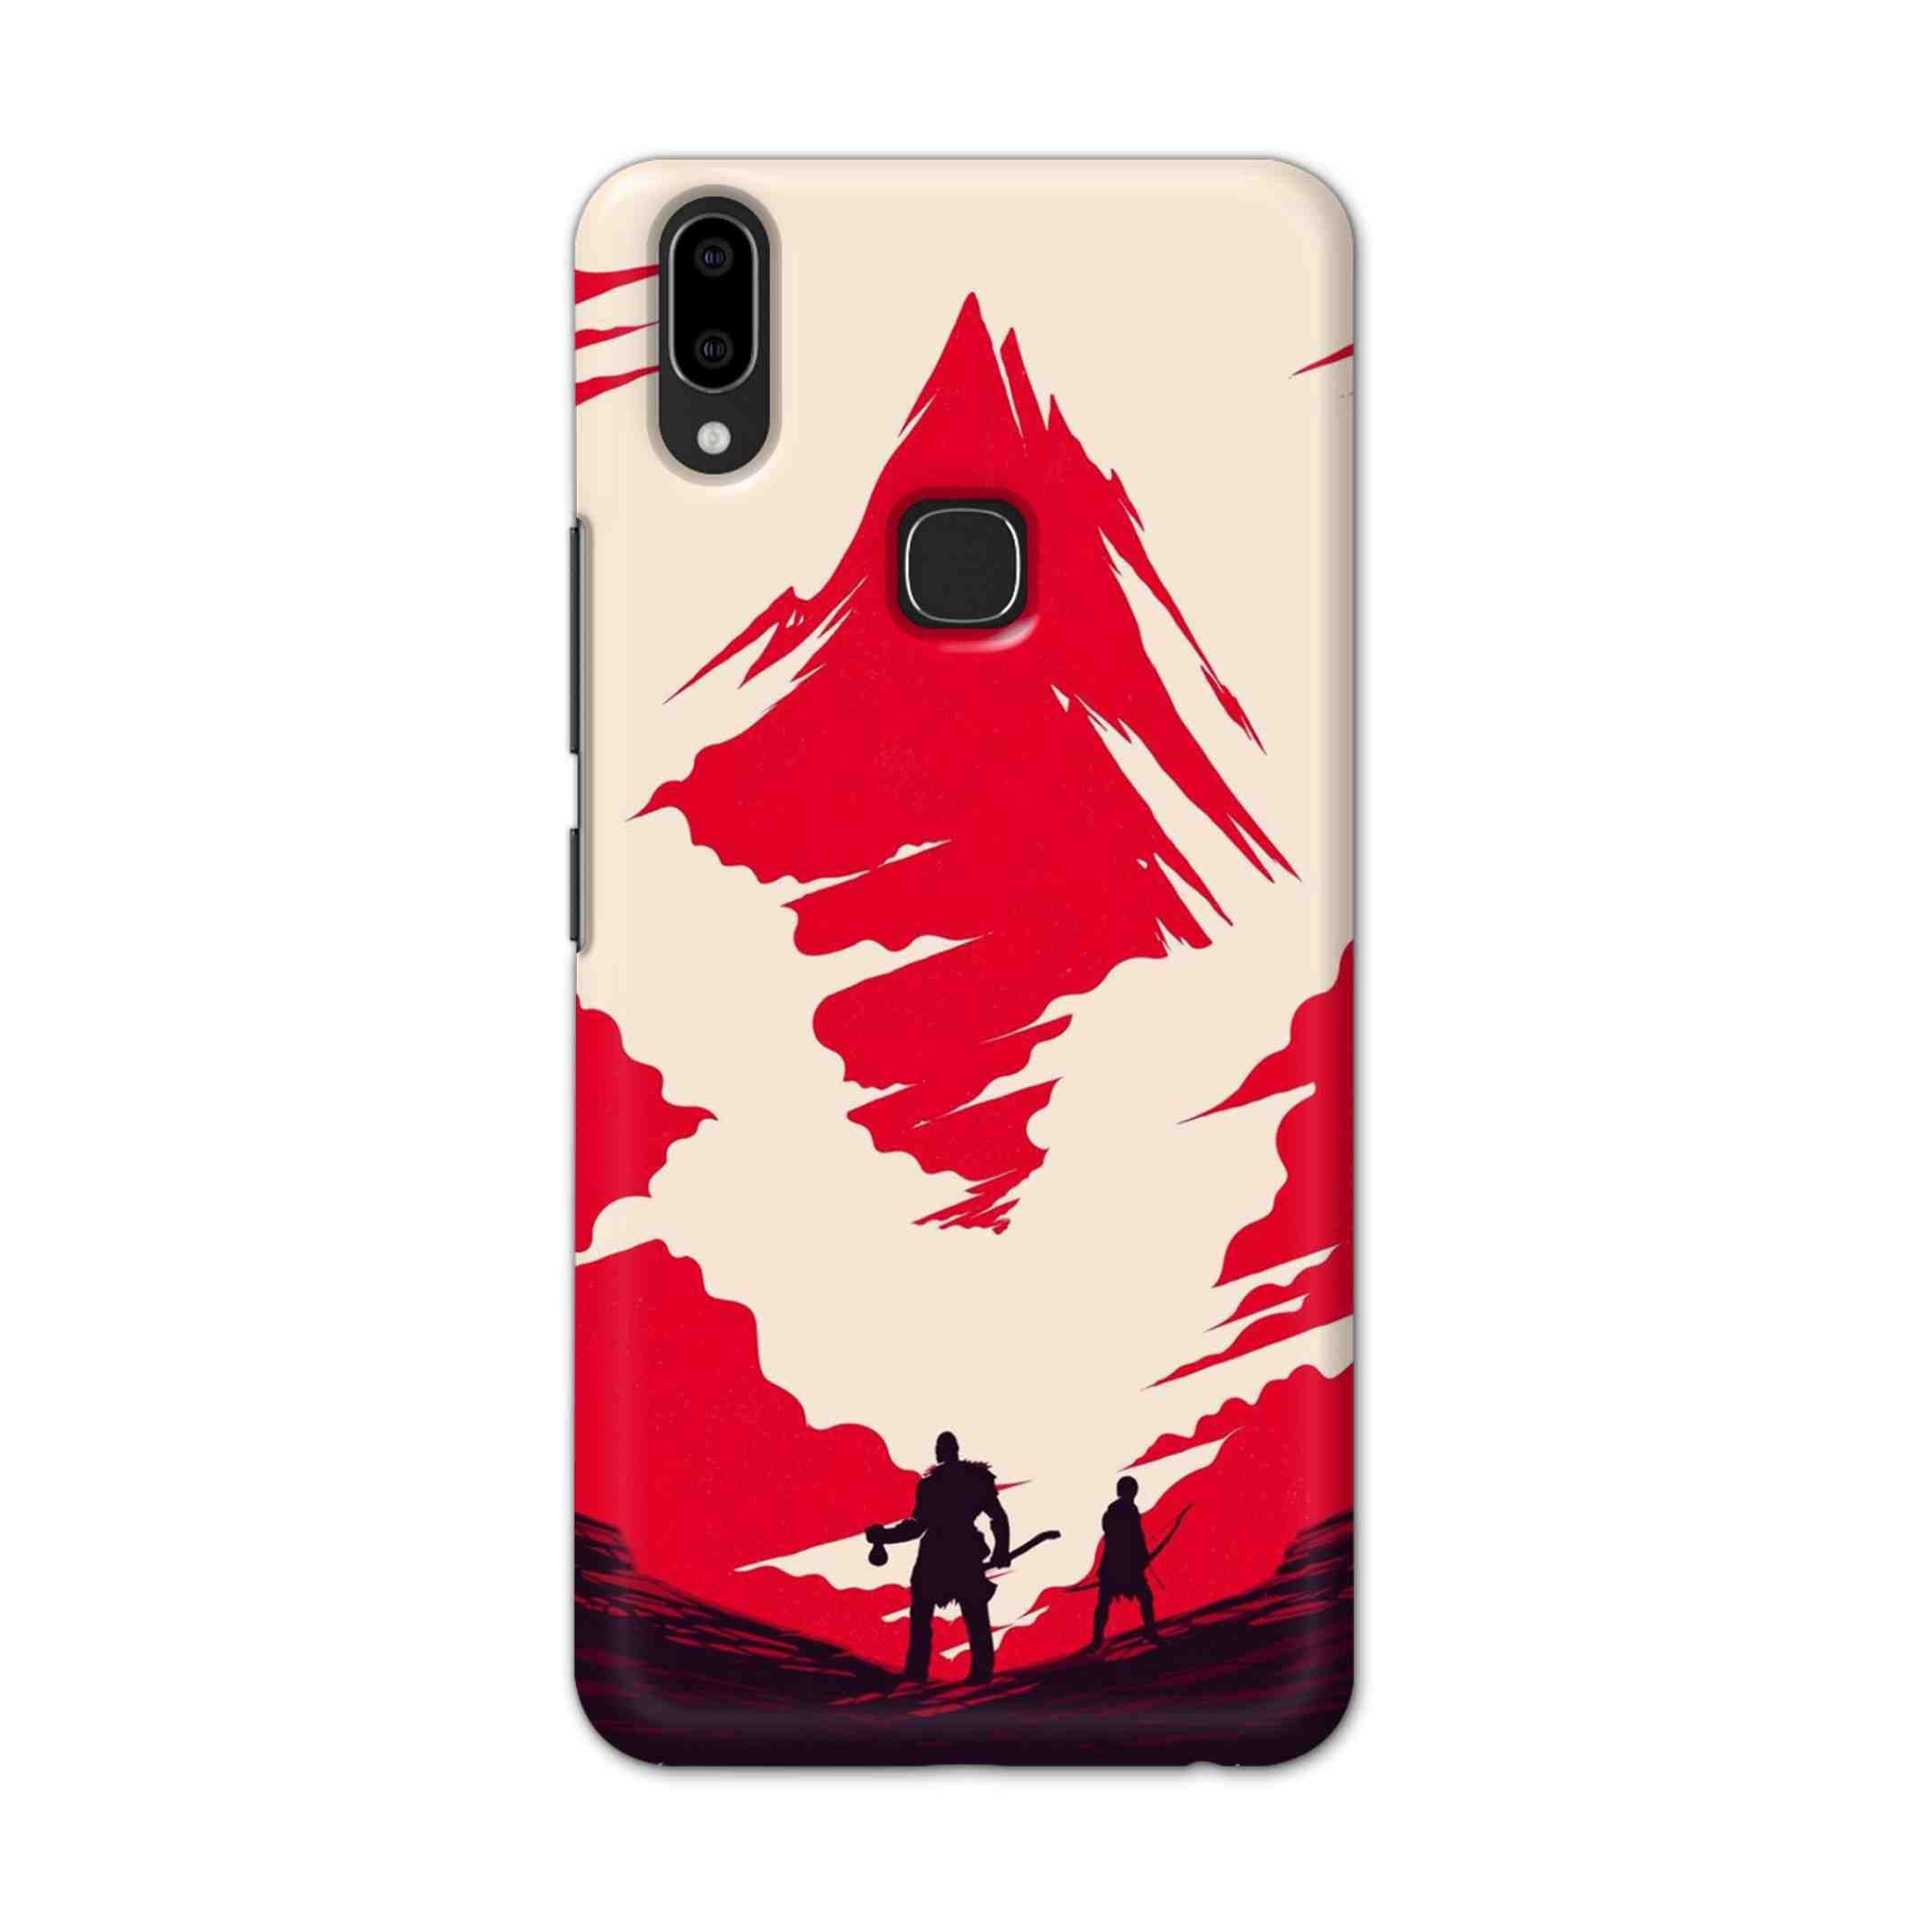 Buy God Of War Art Hard Back Mobile Phone Case Cover For Vivo V9 / V9 Youth Online